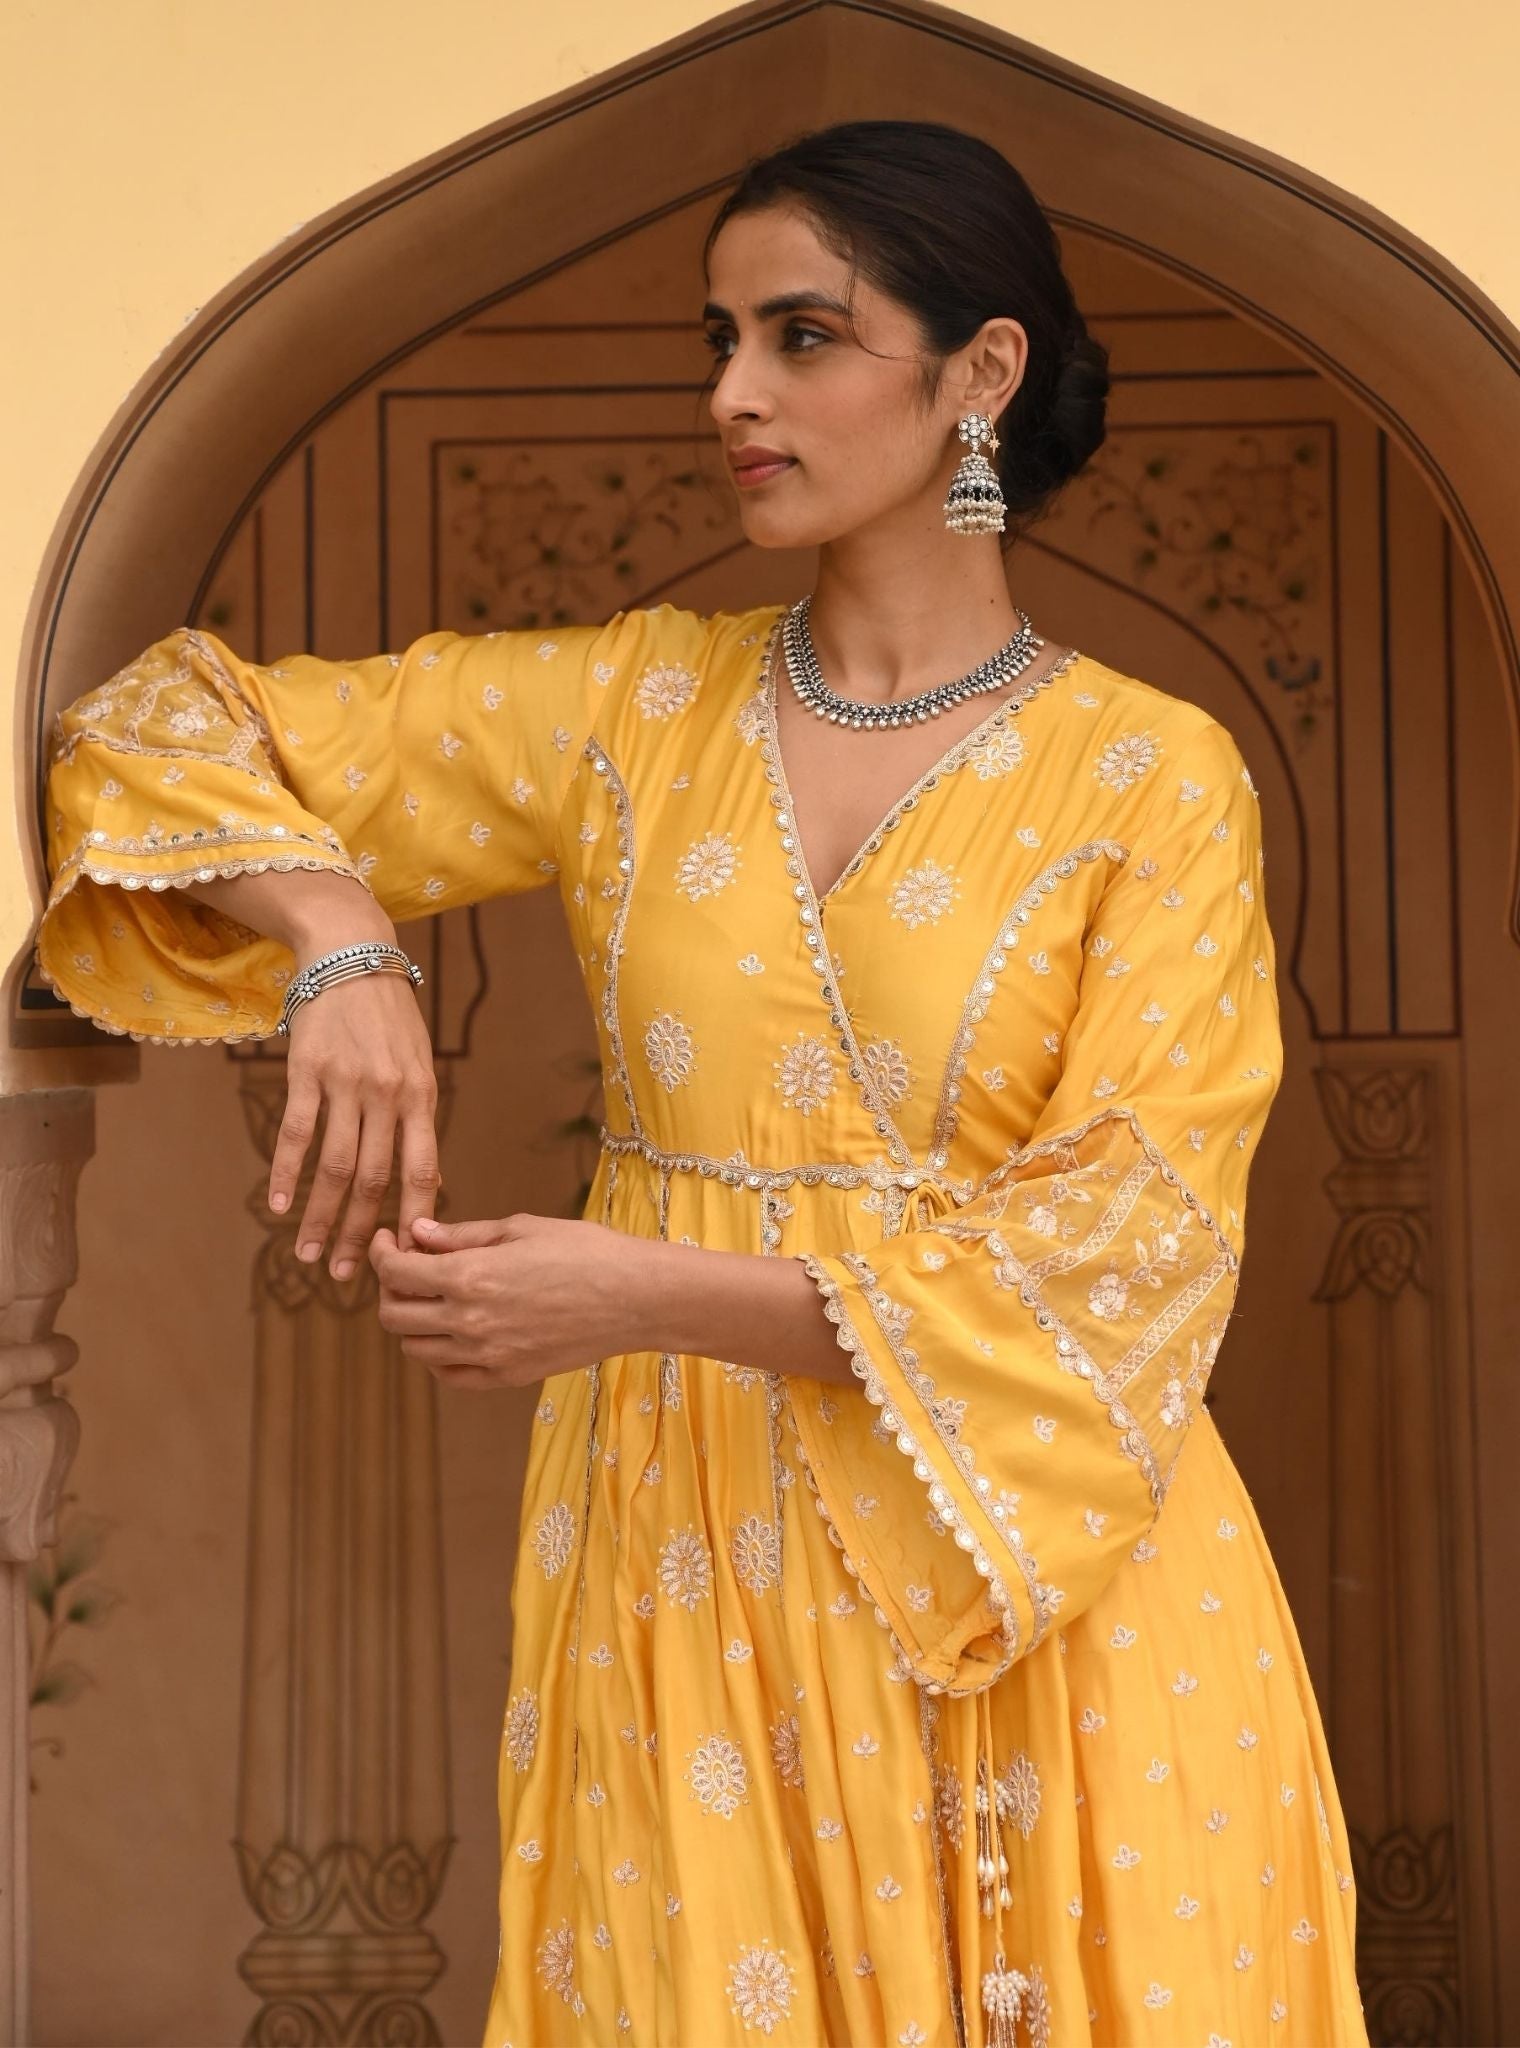 Mulmul Modal Satin Chaiyya Yellow Anarkali Kurta with Mulmul Modal Satin Chaiyya Yellow Pant